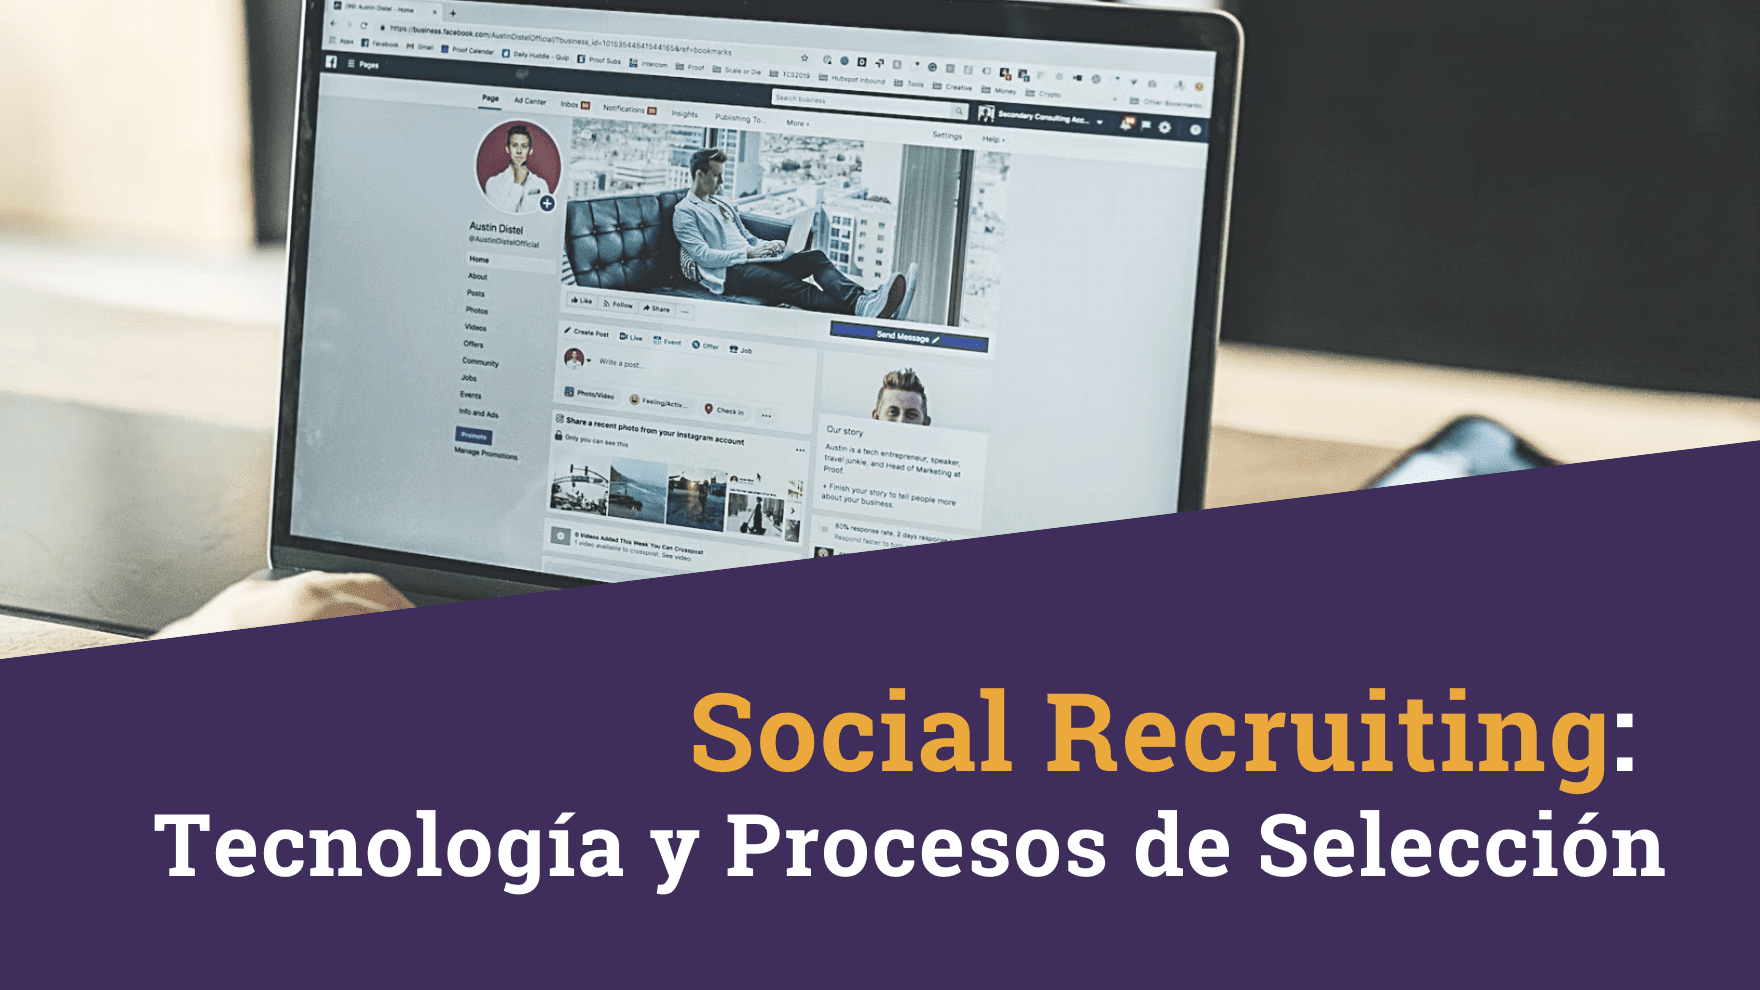 Social Recruiting: Tecnología y Procesos de Selección